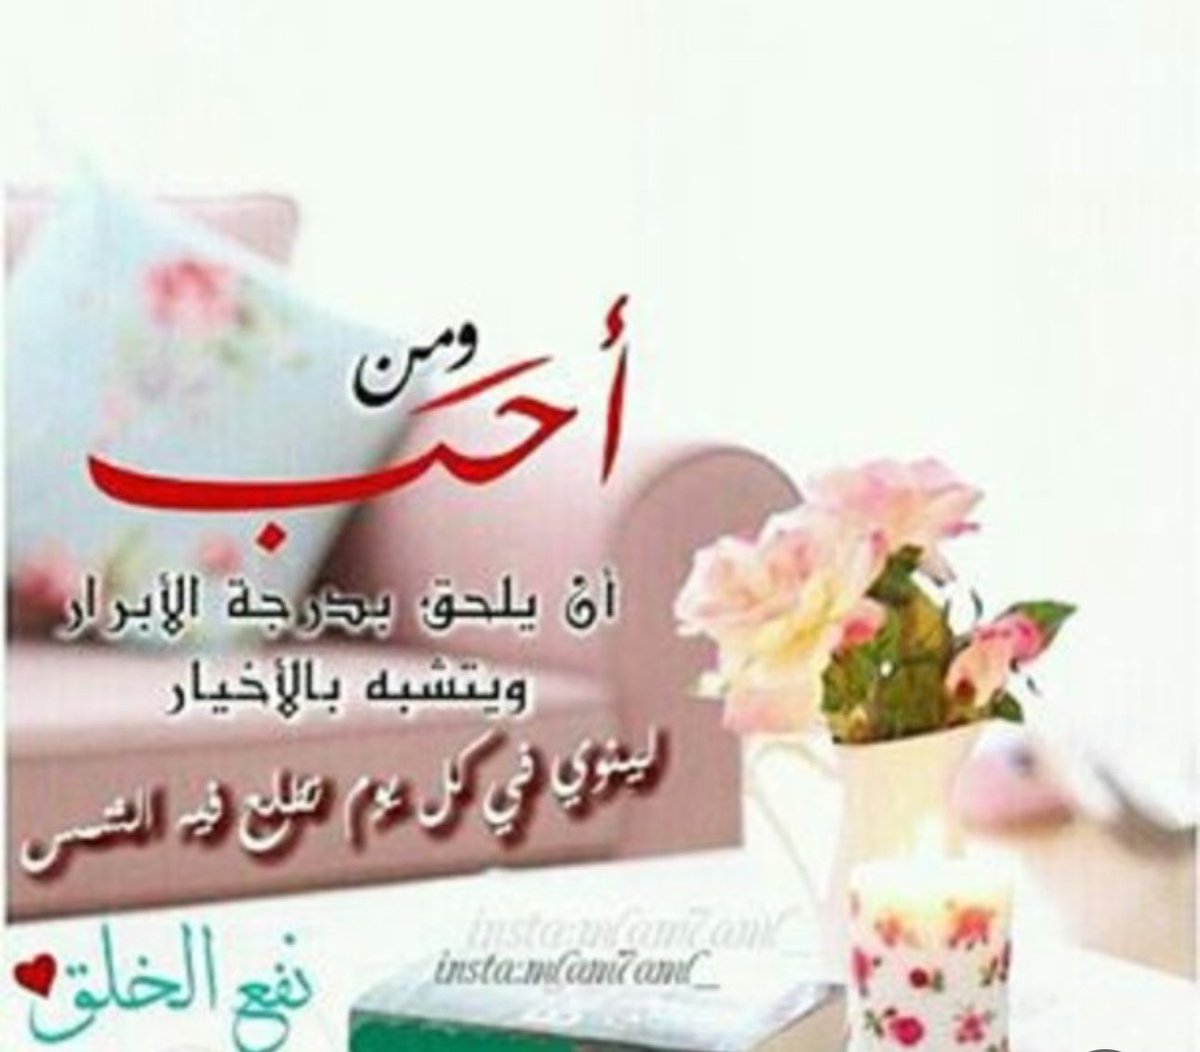 hafedat_Alfaruq tweet picture